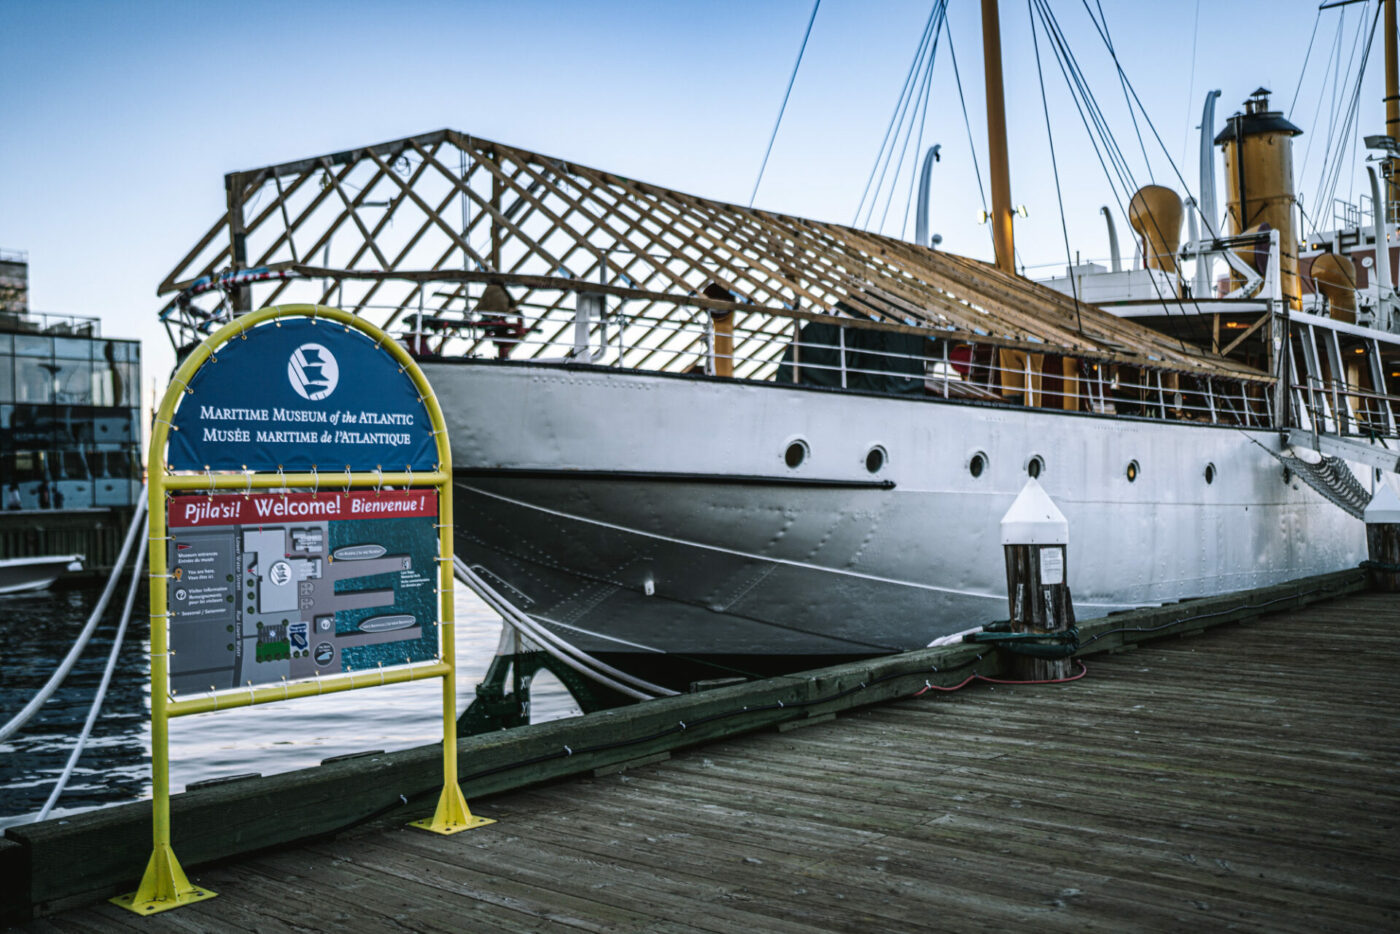 Halifax Maritime Museum of the Atlantic, Nova Scotia things to do 